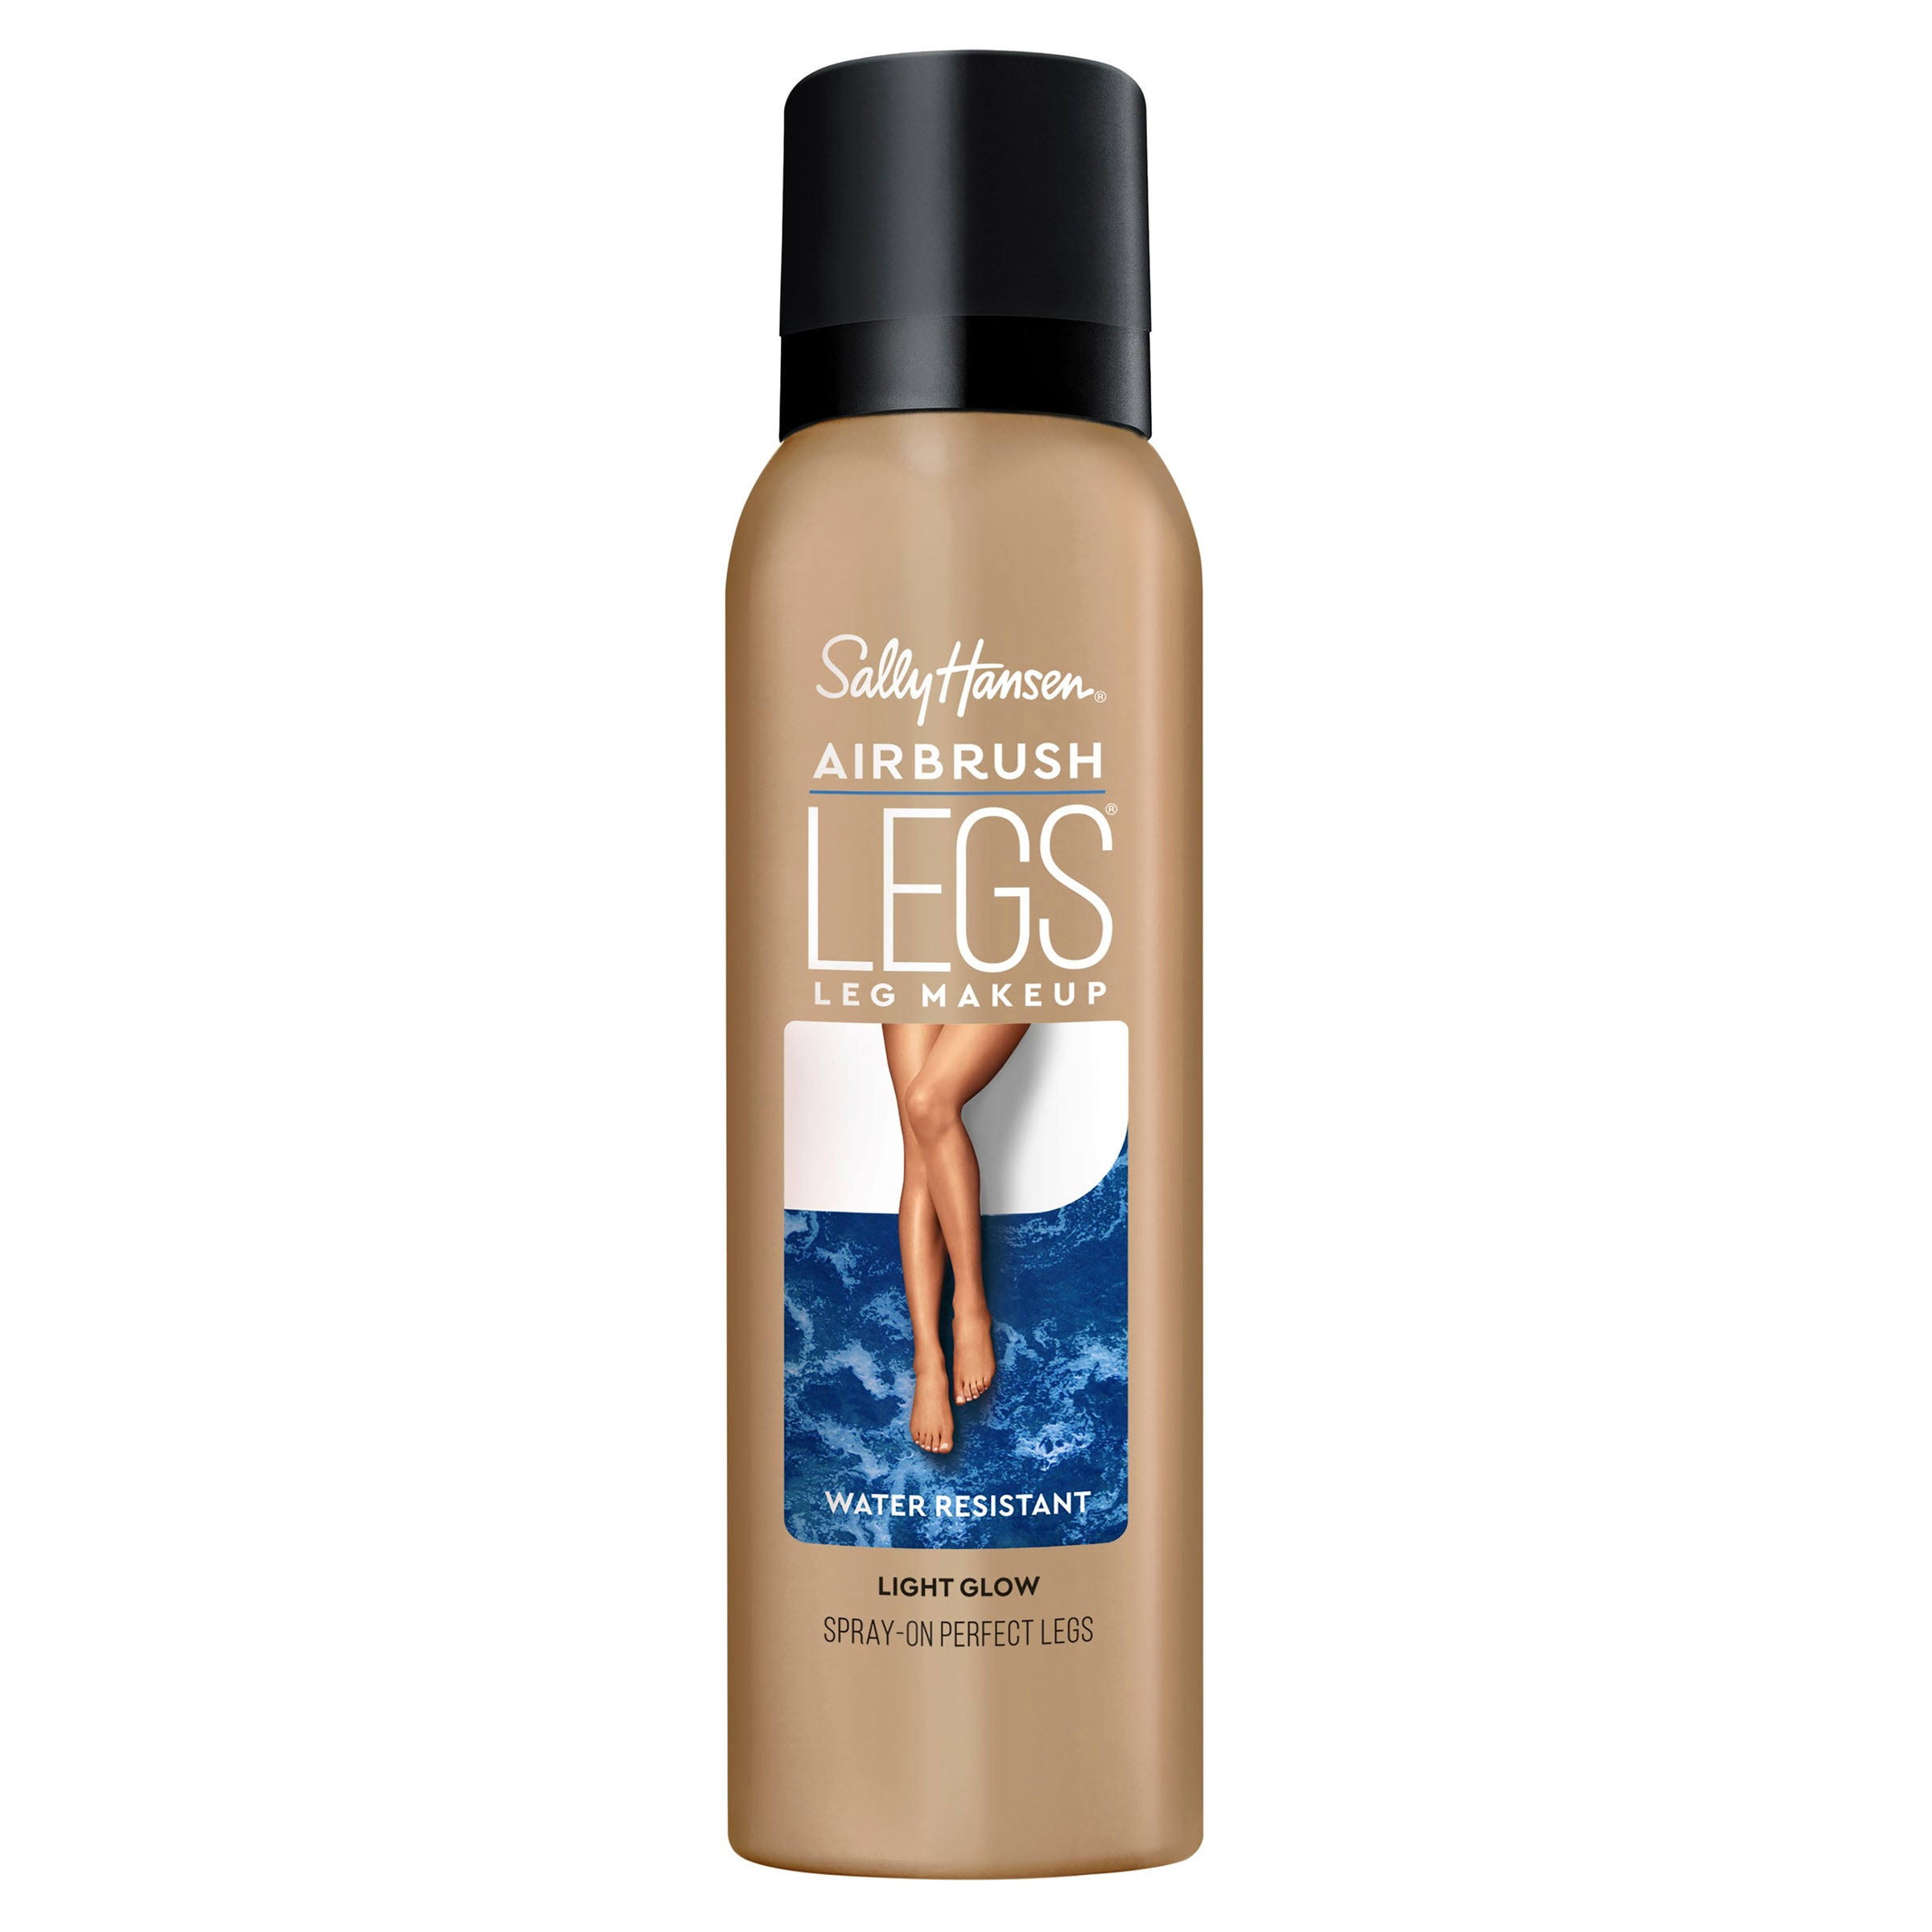 Sally Hansen Airbrush Legs Leg Makeup - Light Glow